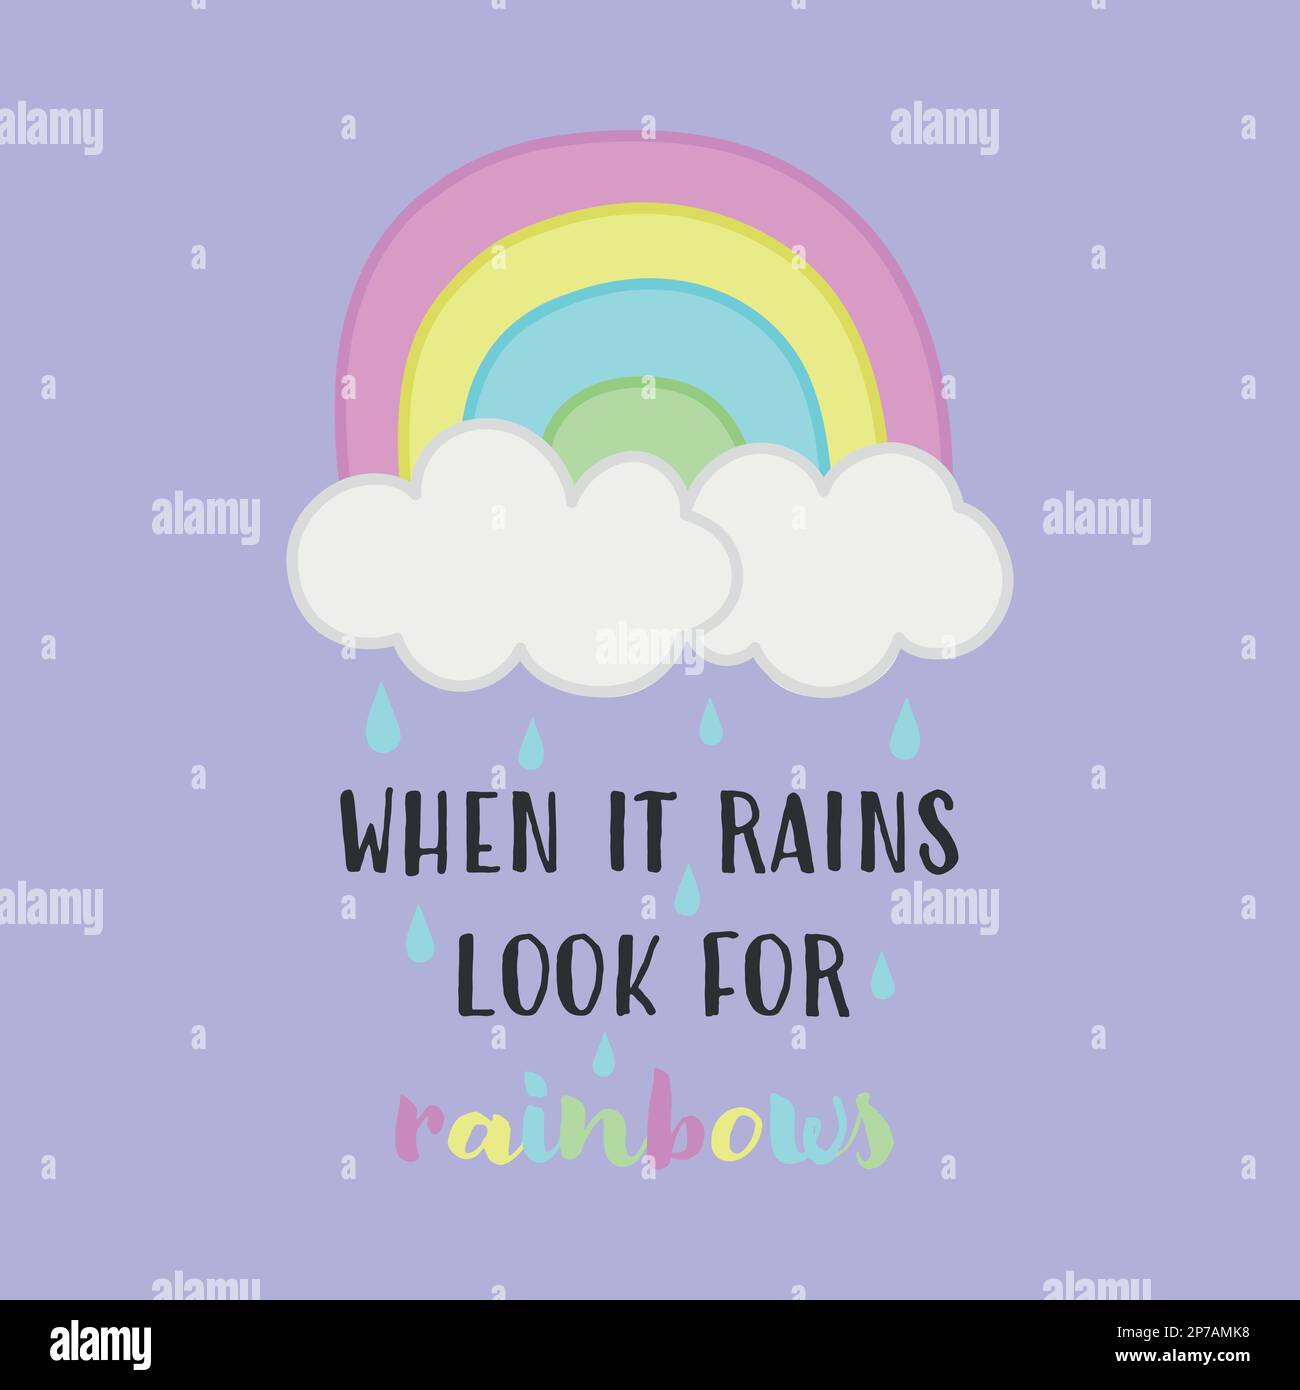 When it rains look for rainbow vector illustration Stock Vector